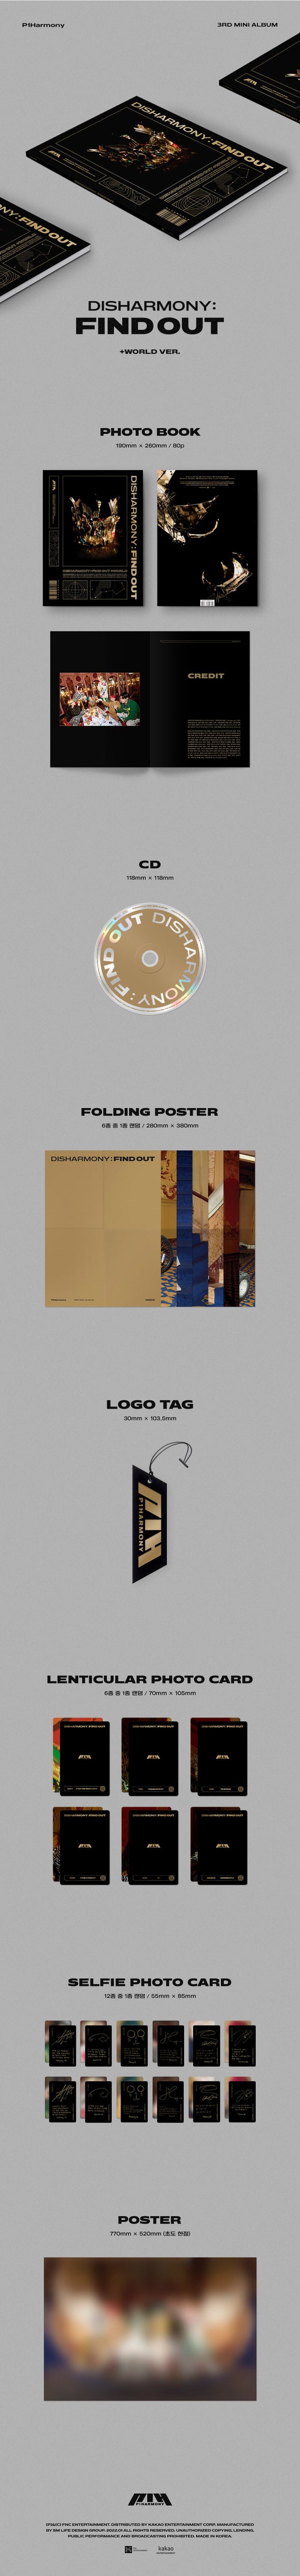 P1HARMONY - Disharmony: Find Out 3rd Mini Album (Random Version)